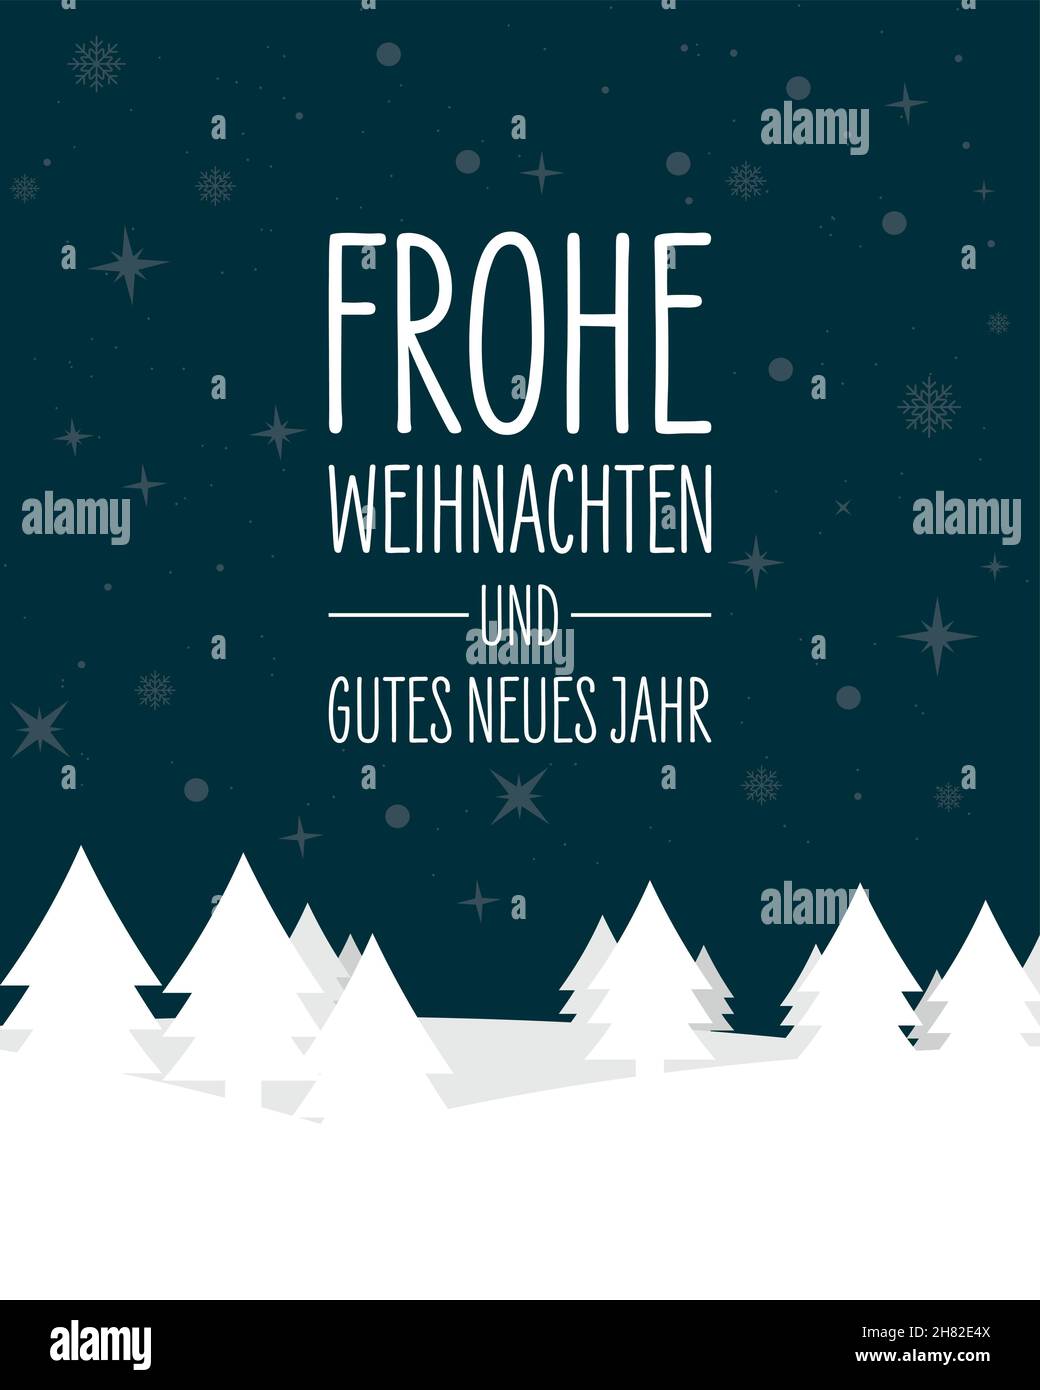 Frohe Weihnachten und gutes neues Jahr. German language. Translation: Merry Christmas and Happy New Year. Stock Vector